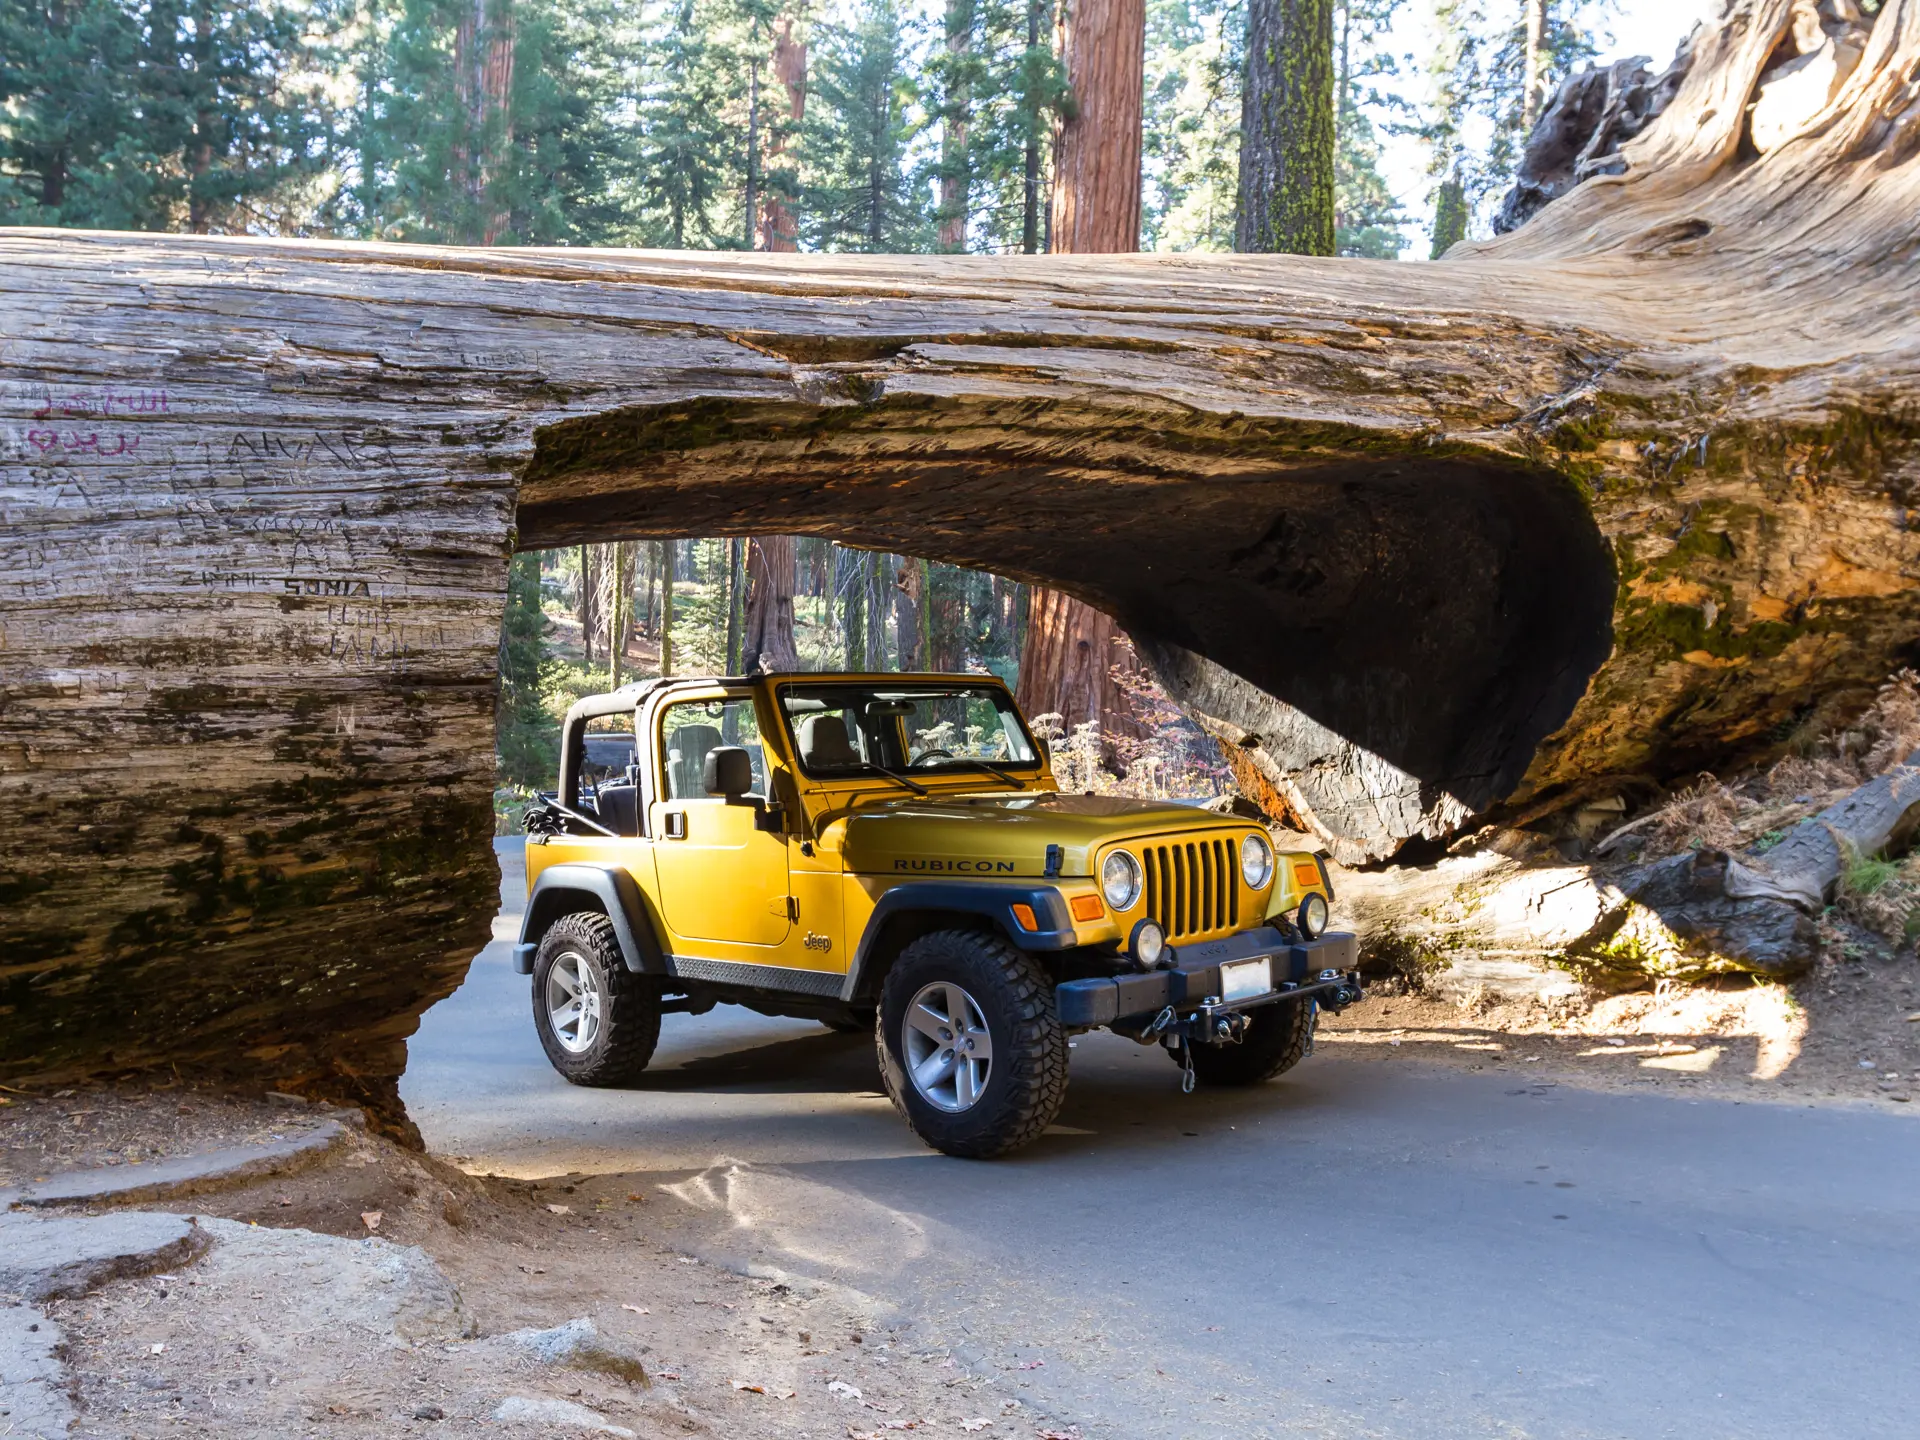 Bil gennem Tunnel Log i Sequoia NP - shutterstock_544562563.jpg